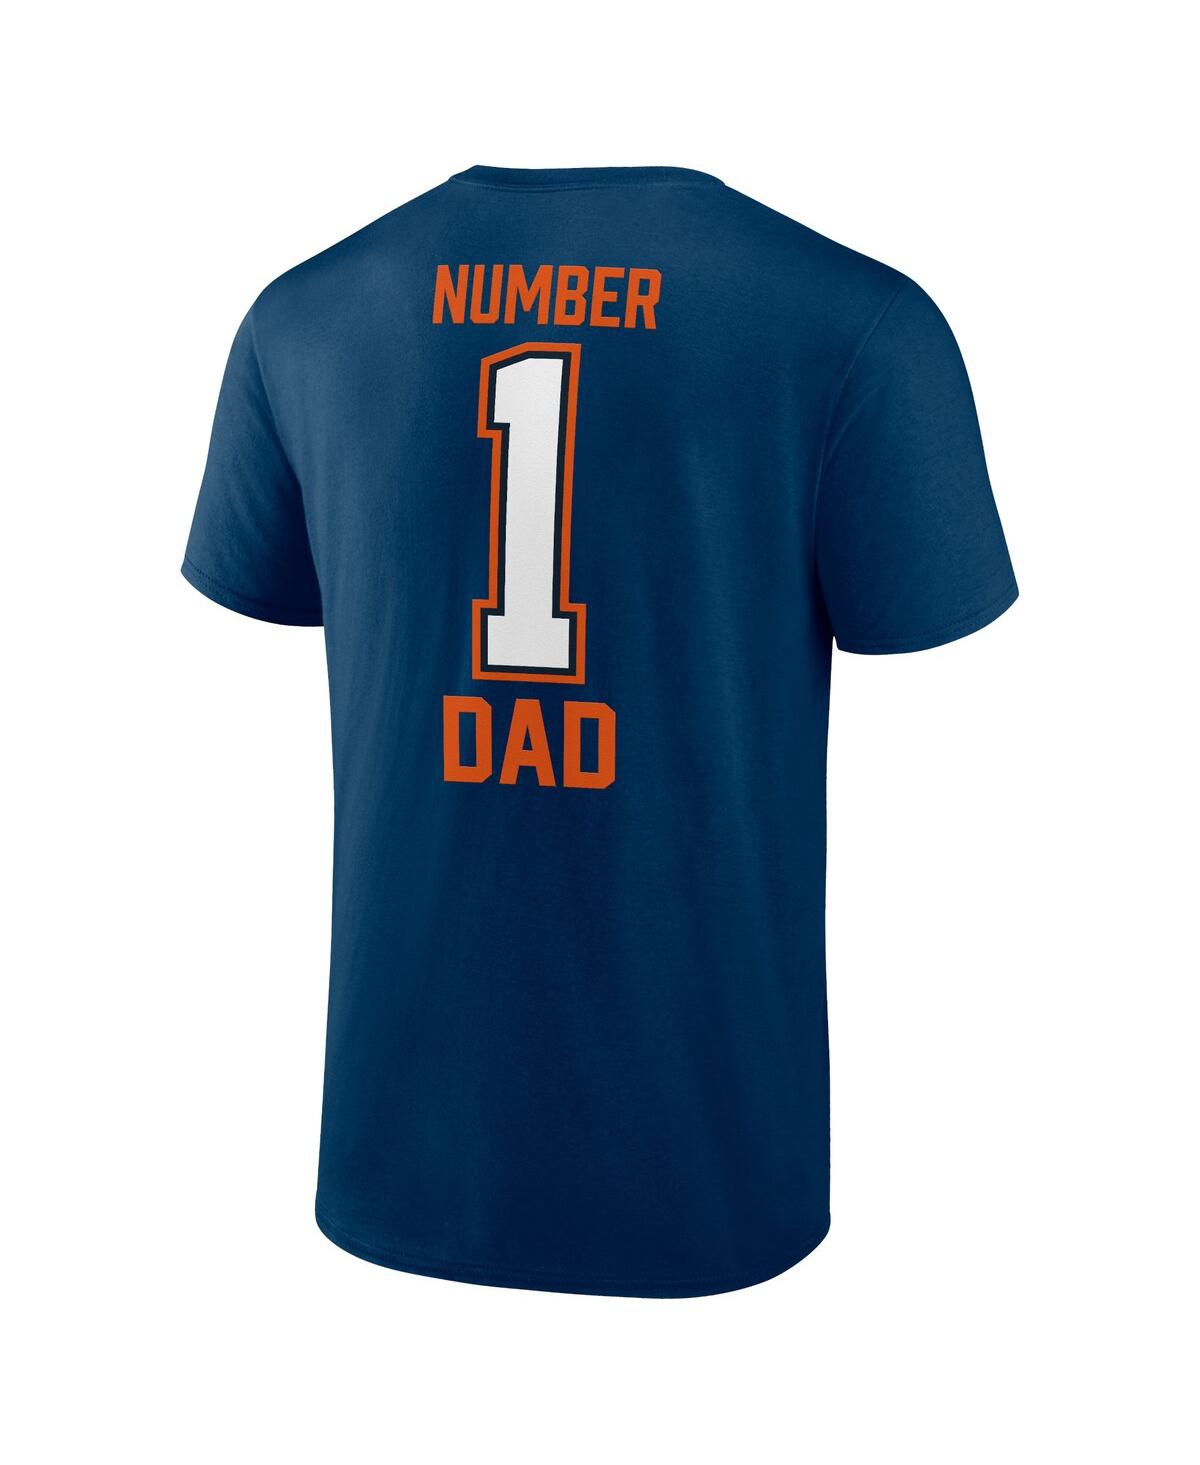 Shop Fanatics Men's  Navy Chicago Bears Father's Day T-shirt